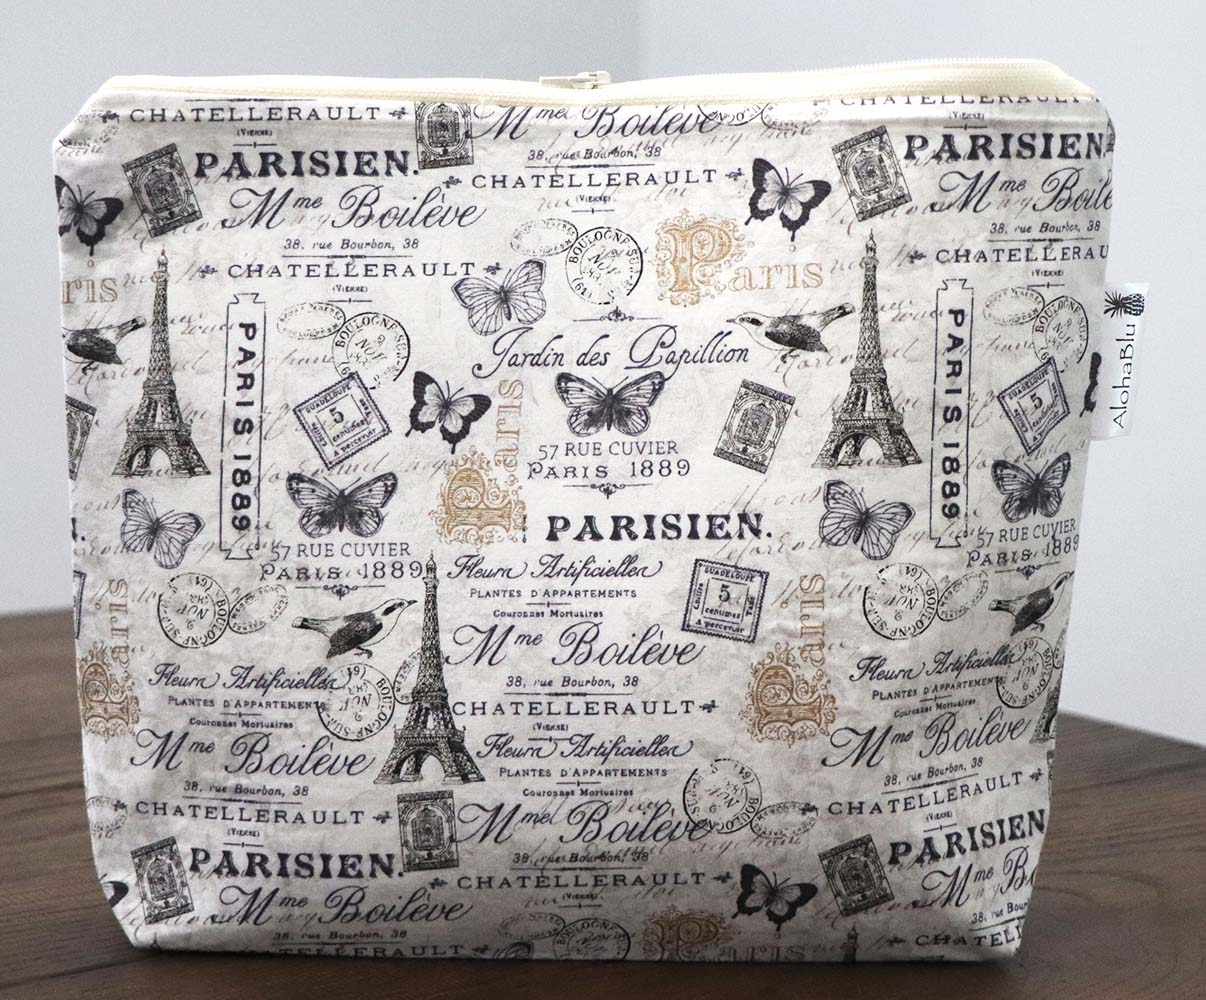 PARIS - Handmade zipper bag